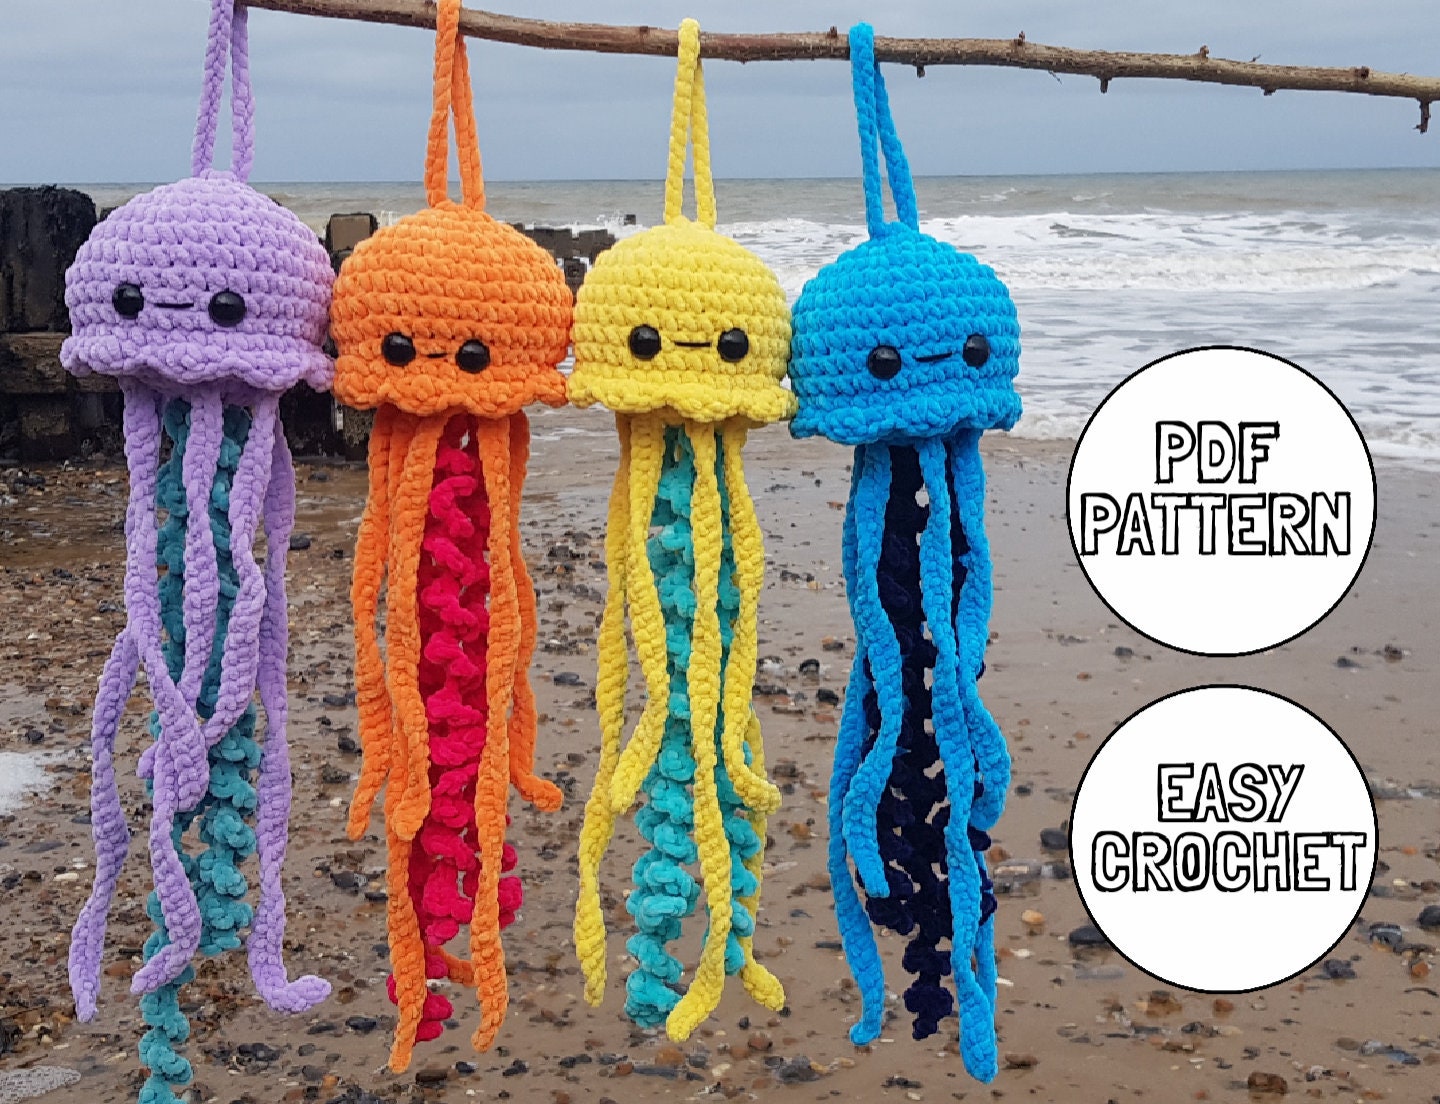 Jellyfish, Crochet Stuffed Animal - The McGarvey Workshop